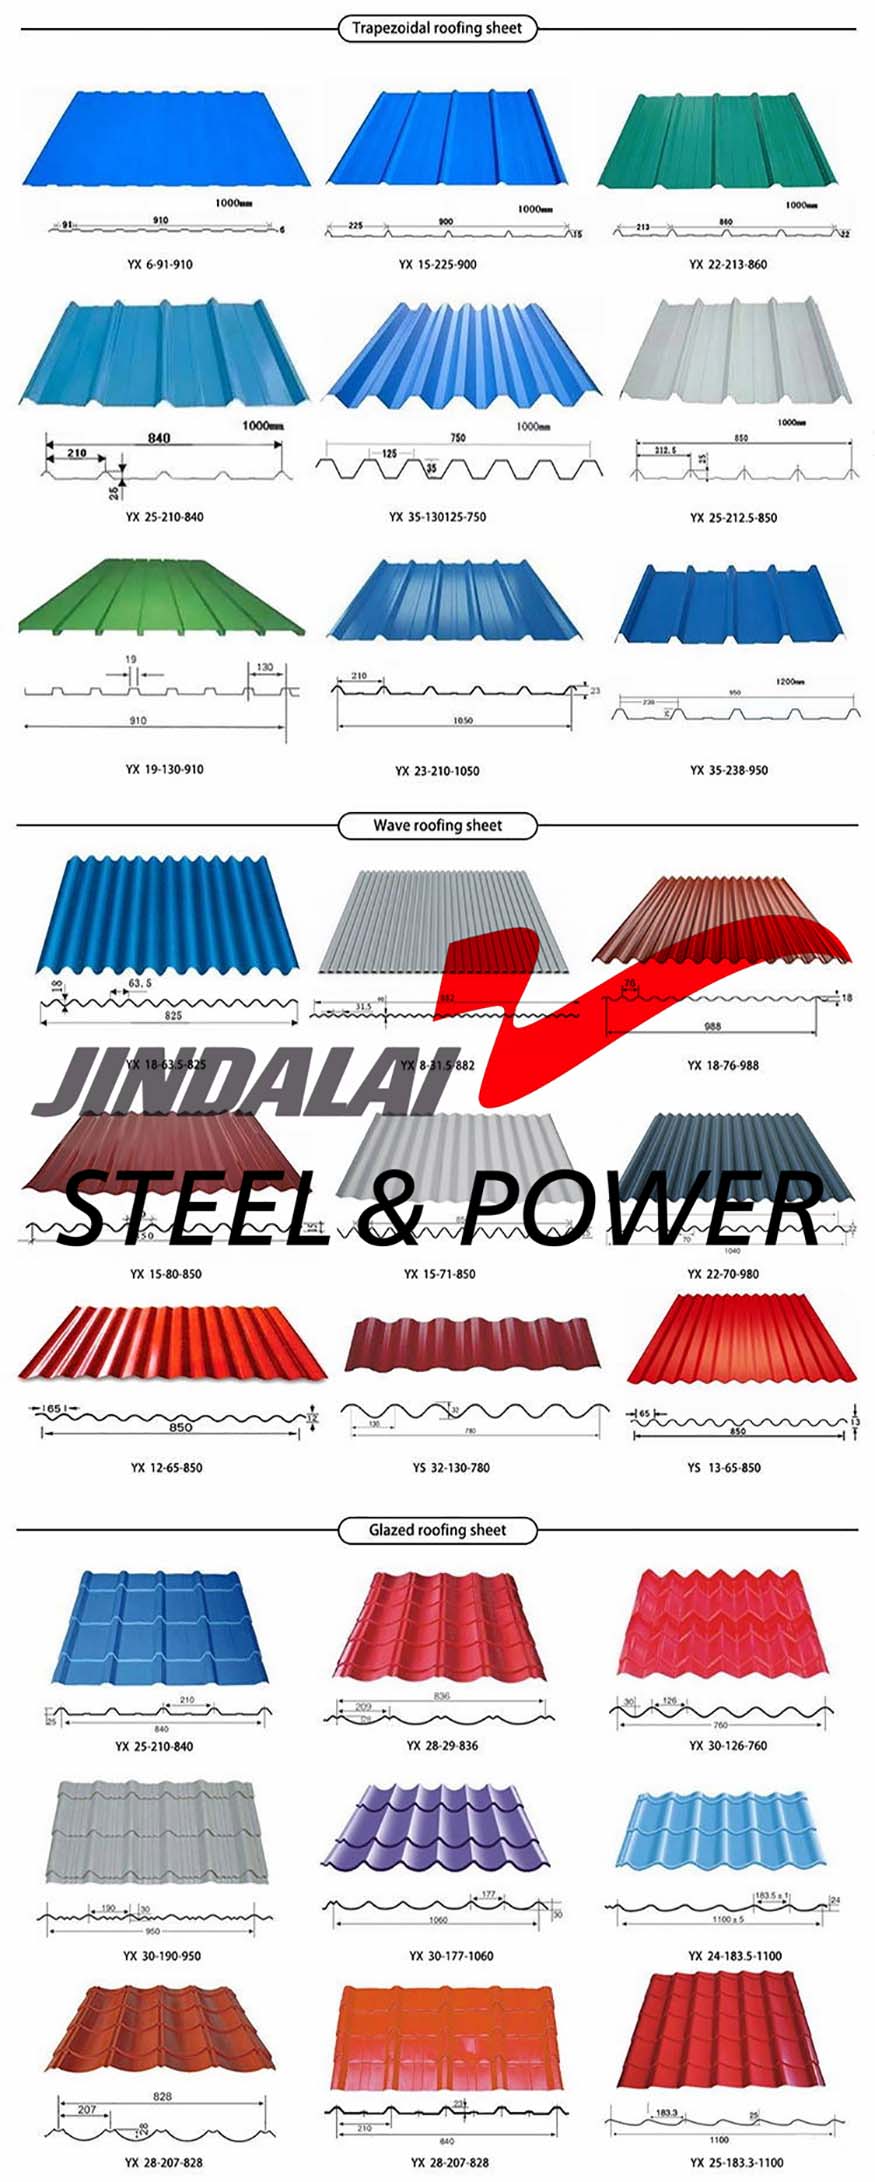 jindalaisteel-ppgi-ppgl metal roofing sheets7